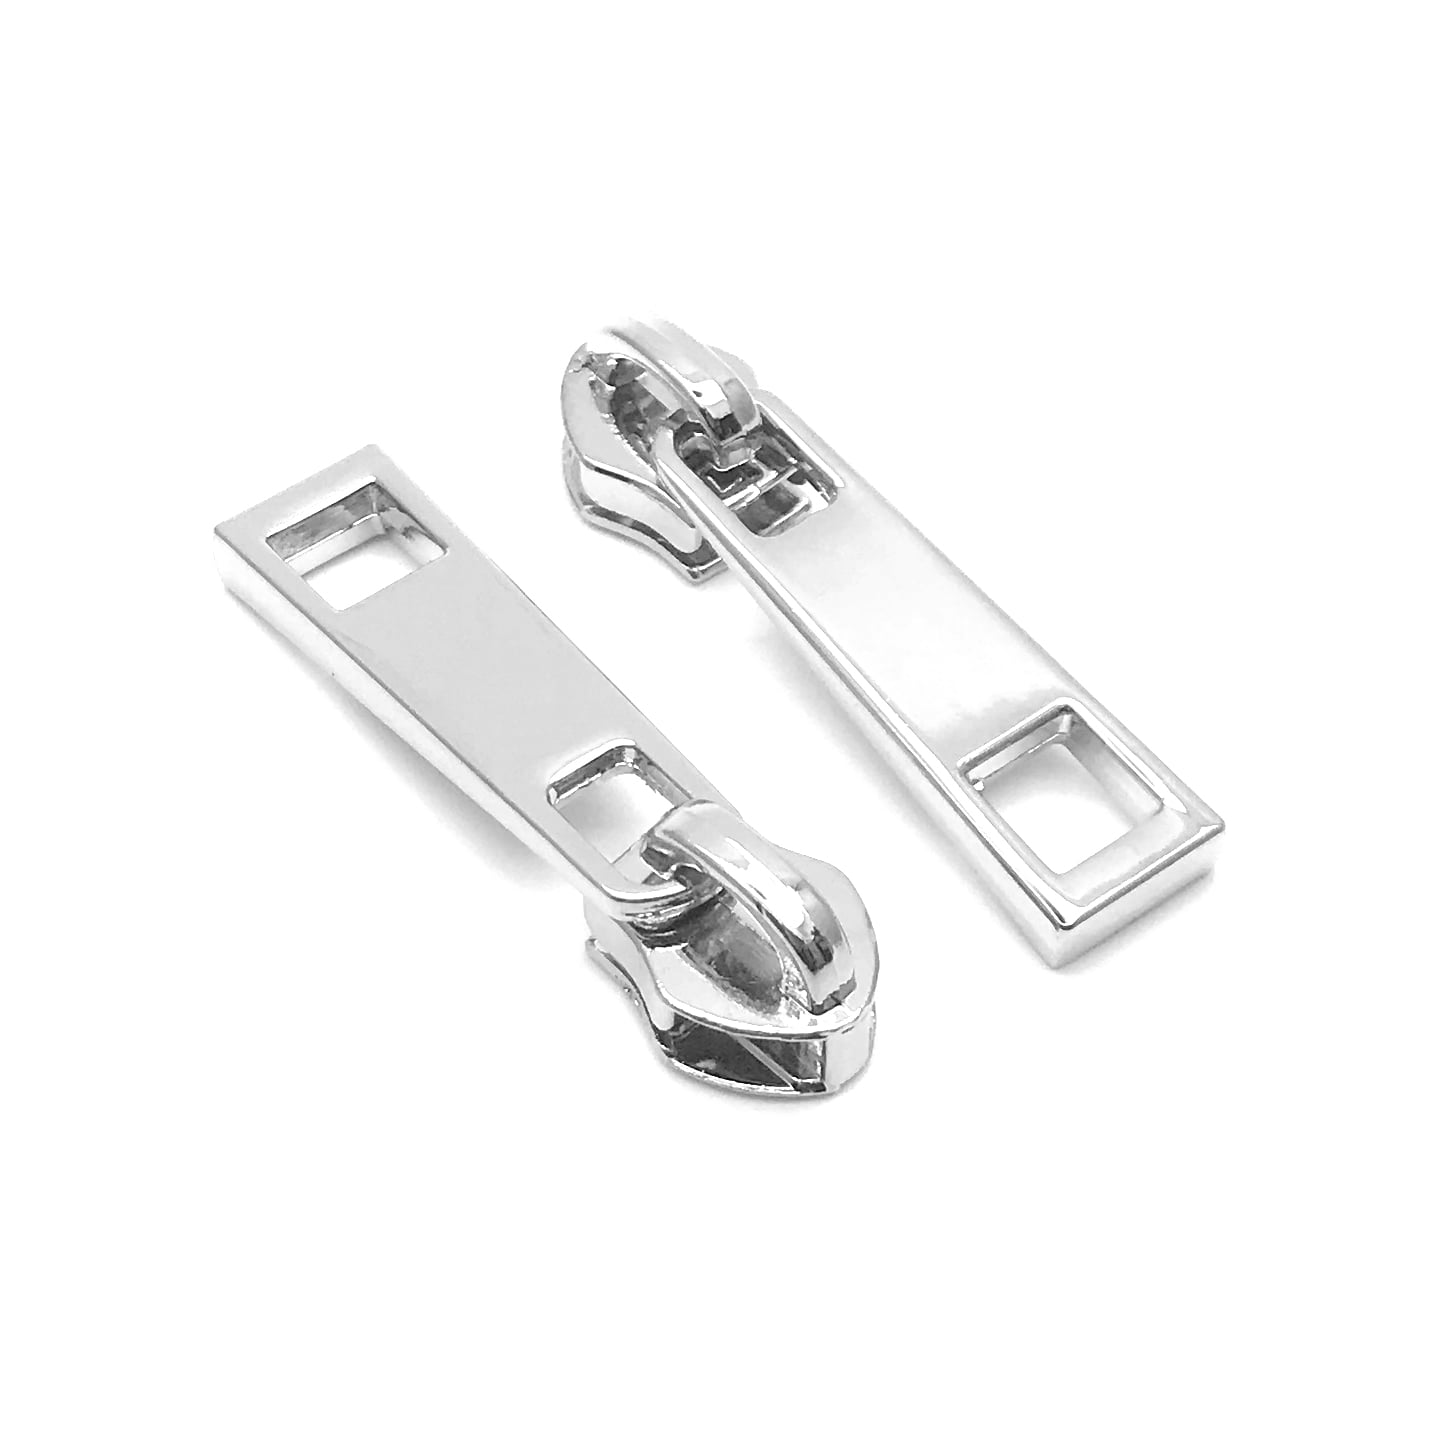 Zipper Slider W/Pulls - Silver Retangle - #5 - 10 pack - EBSP5-1SL